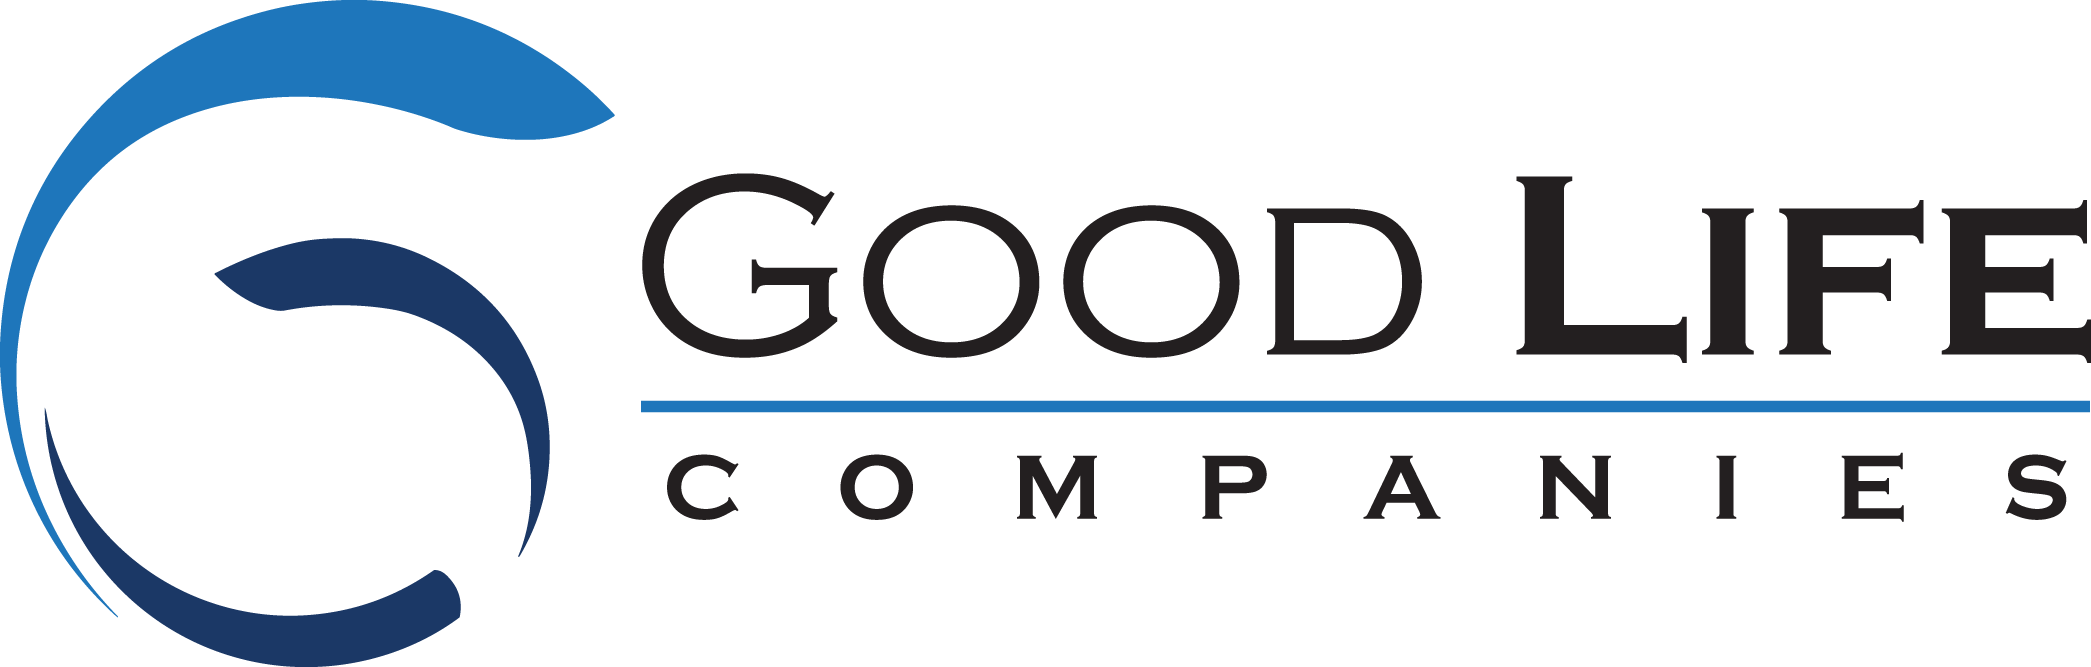 Good Life Companies